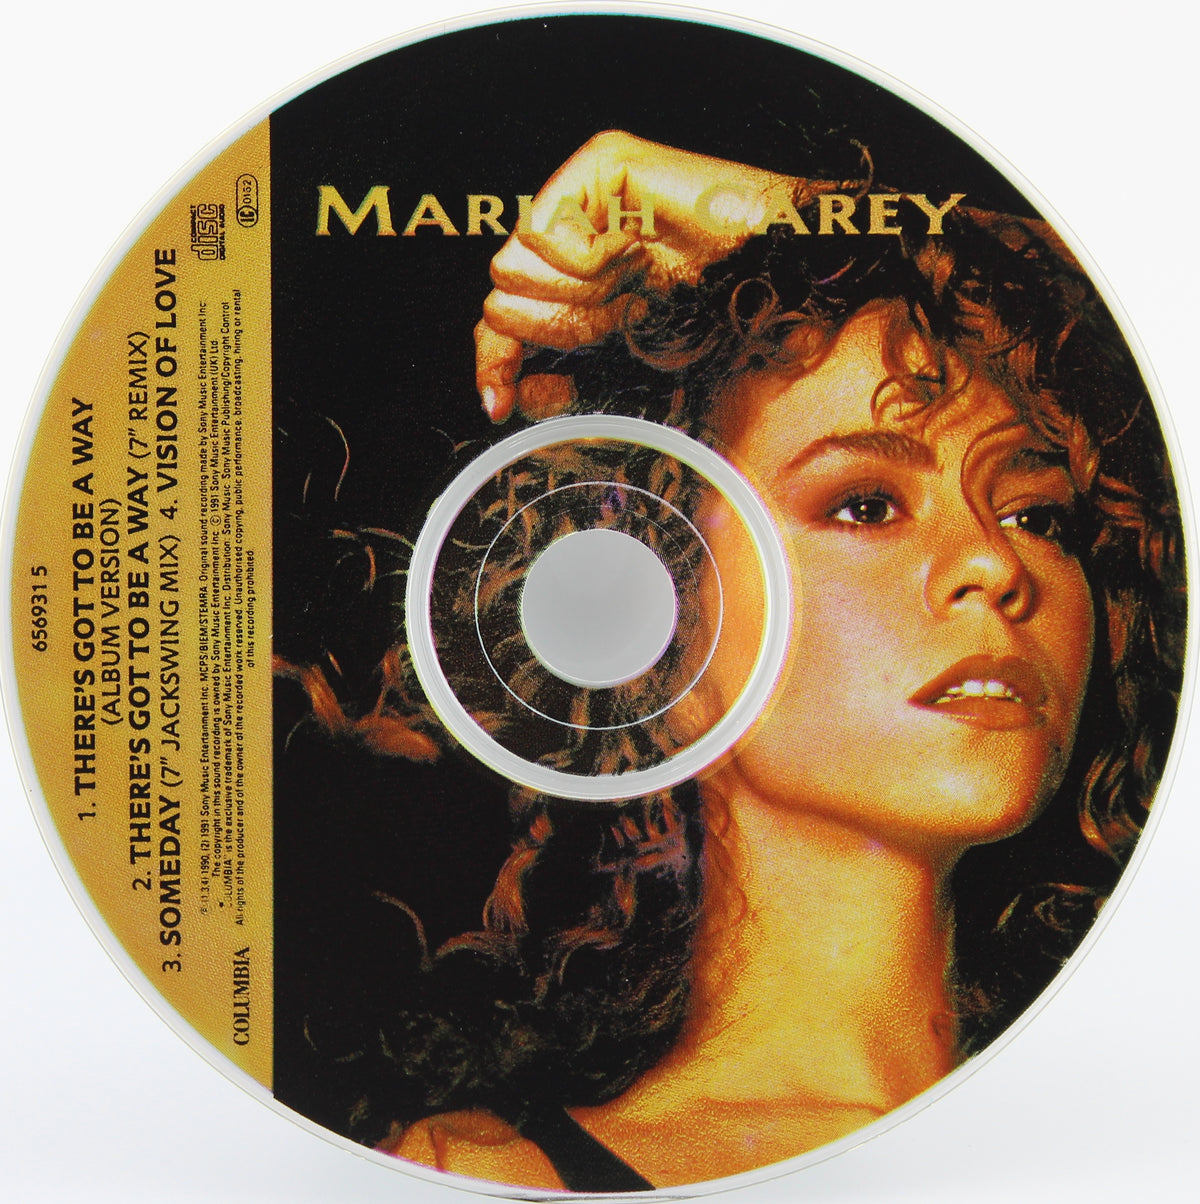 Mariah Carey, There&#39;s Got To Be A Way, CD Single, UK 1991 (CD 658)